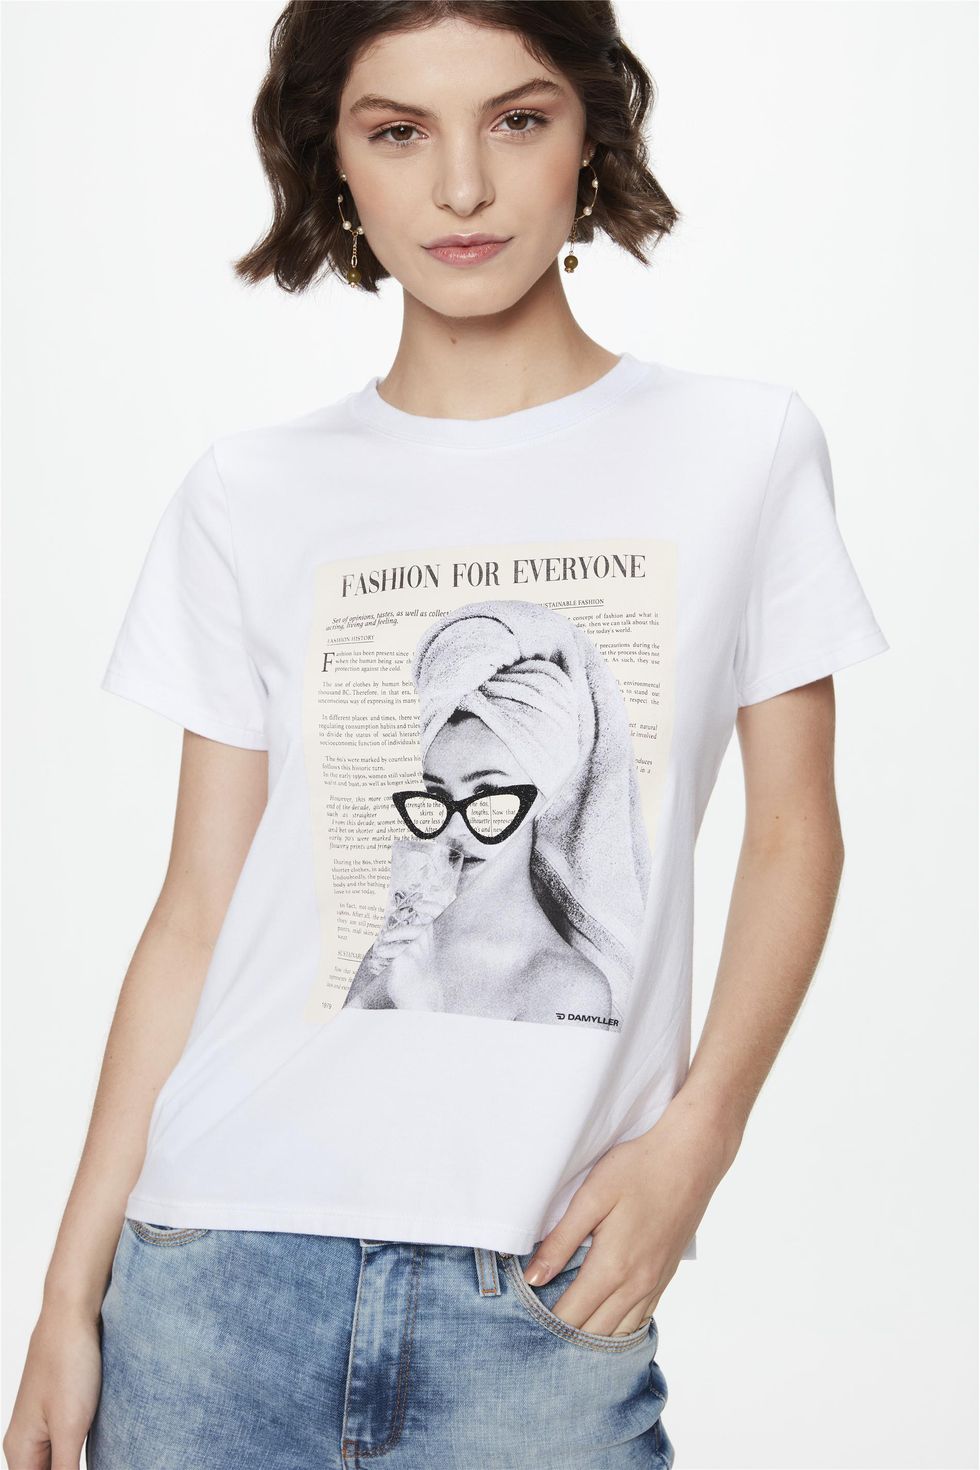 Camiseta-Estampa-Fashion-For-Everyone-Detalhe--